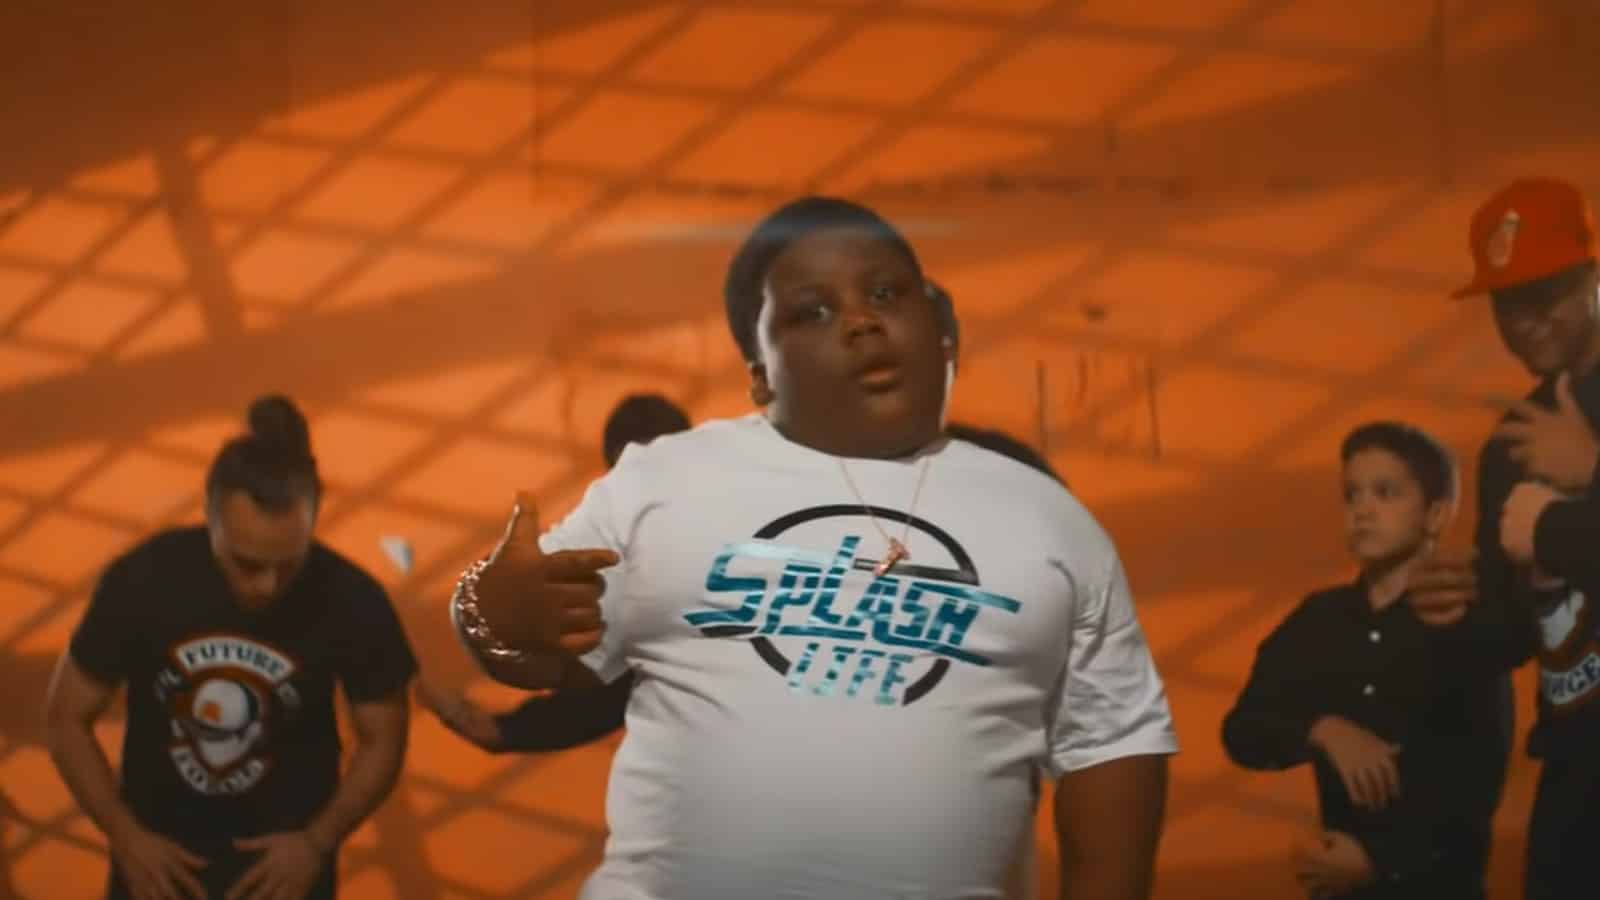 Lil Terrio dancing in 'Oooh Killem' music video 